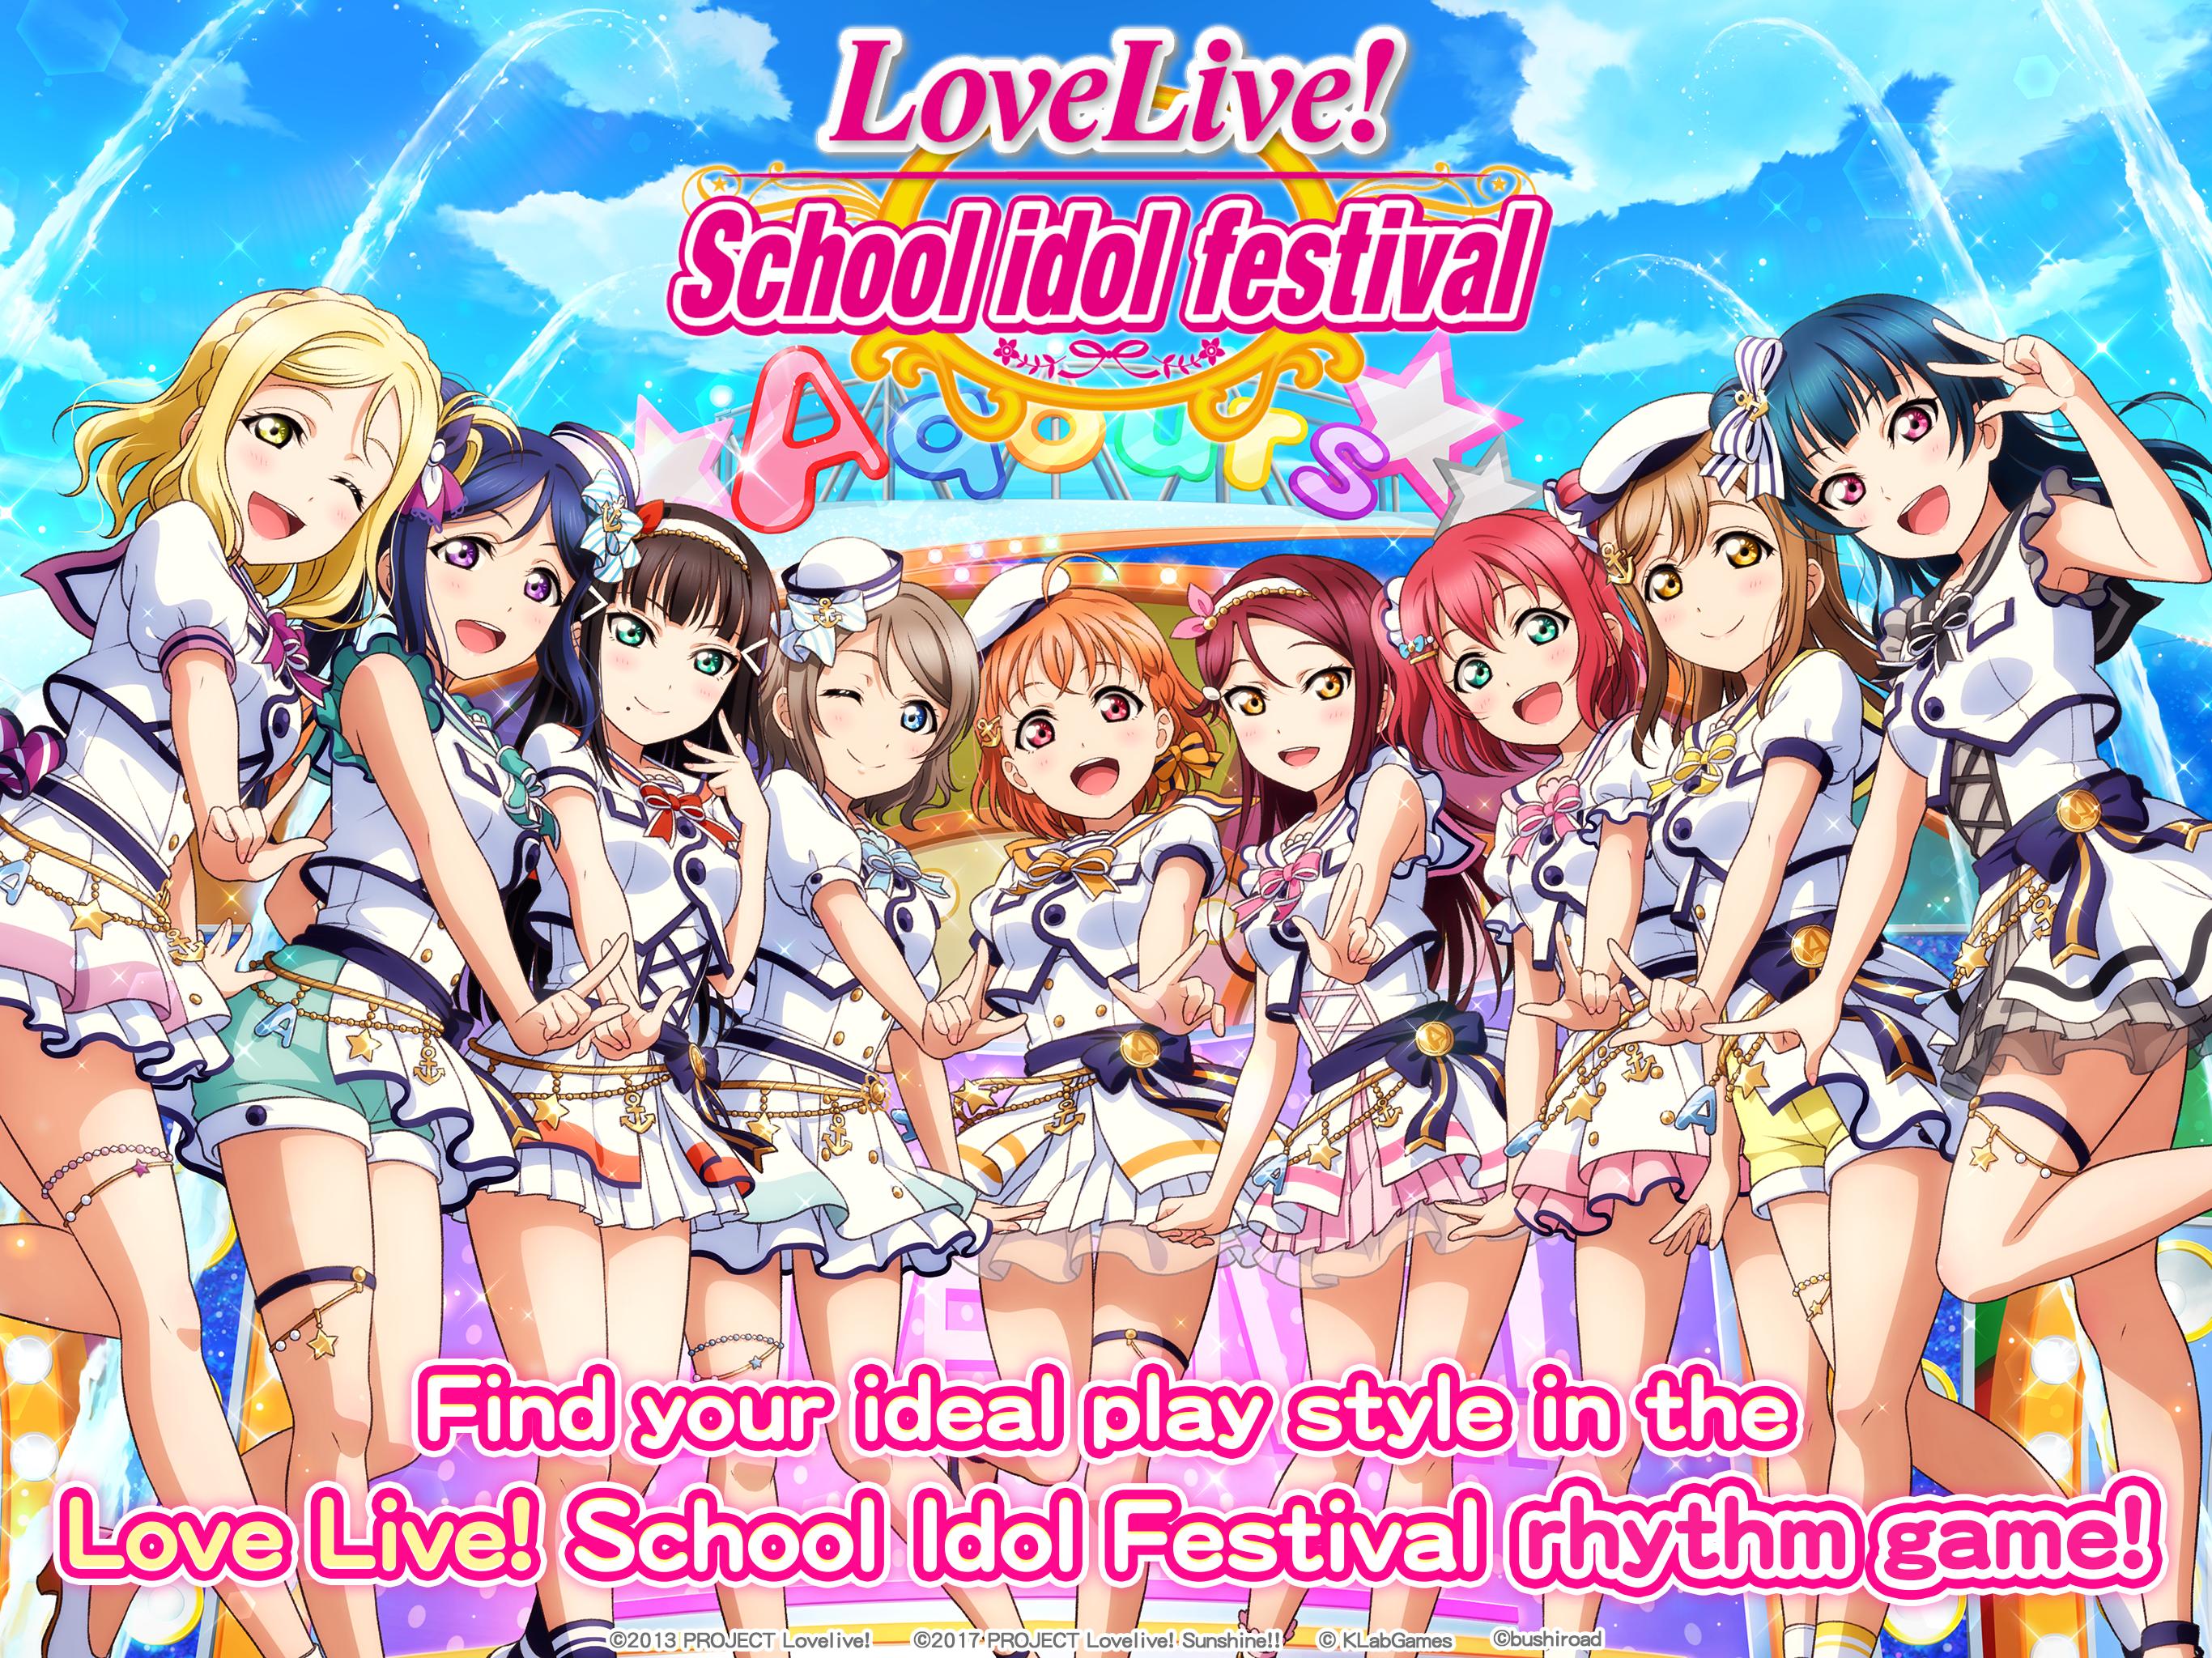 Love Live! School idol festival- Music Rhythm Game 6.9.2 Screenshot 8